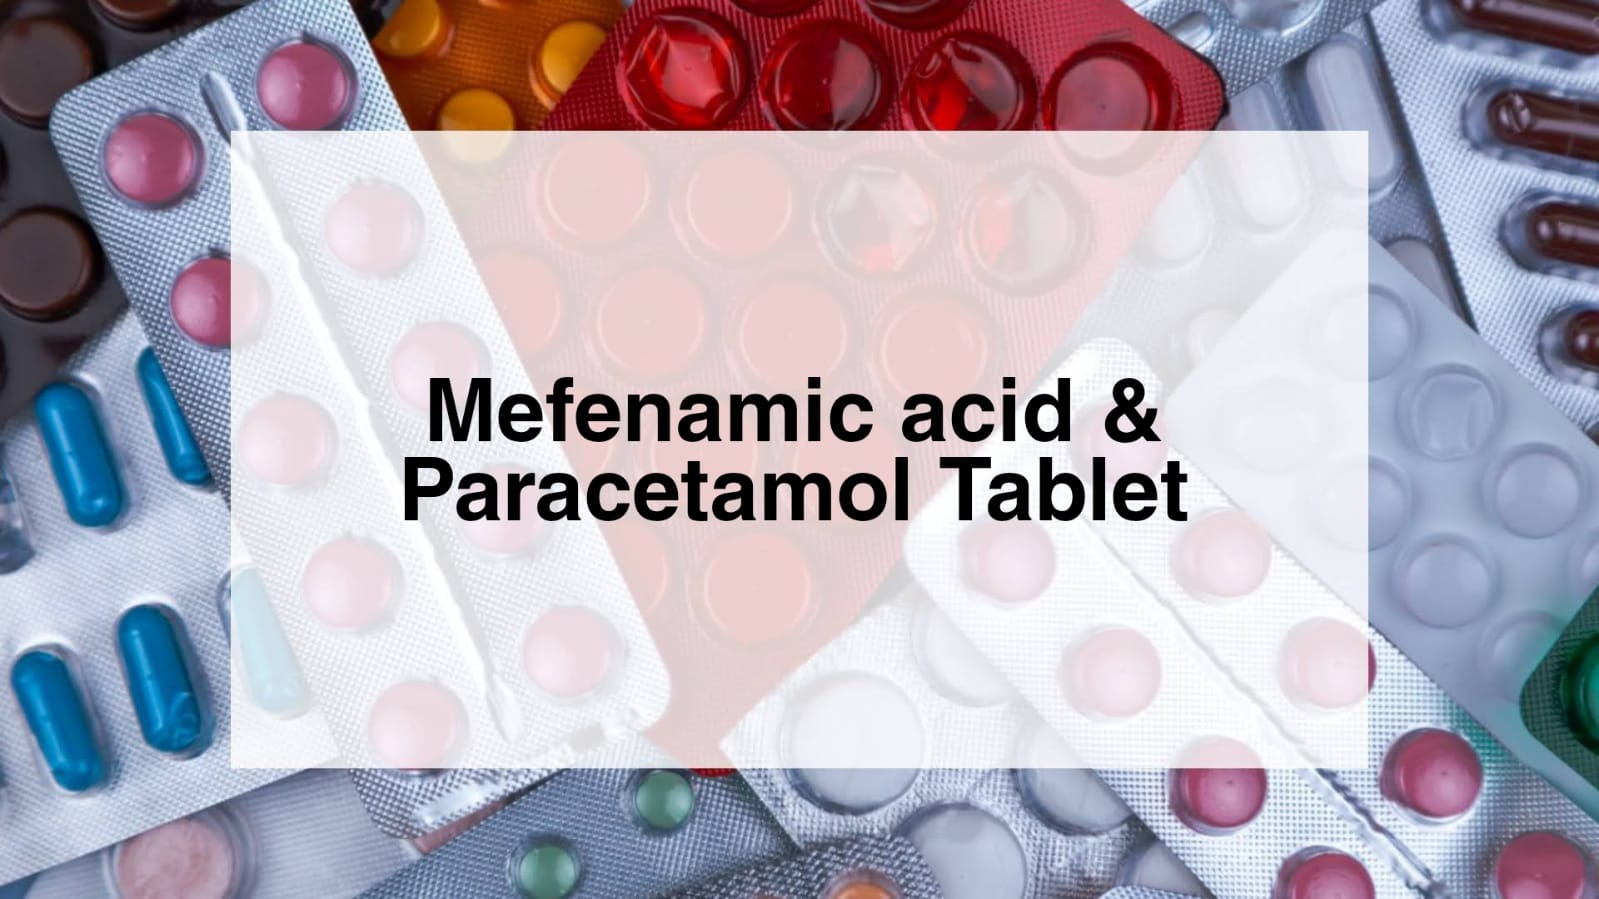 Mefenamic acid and Paracetamol Tablet